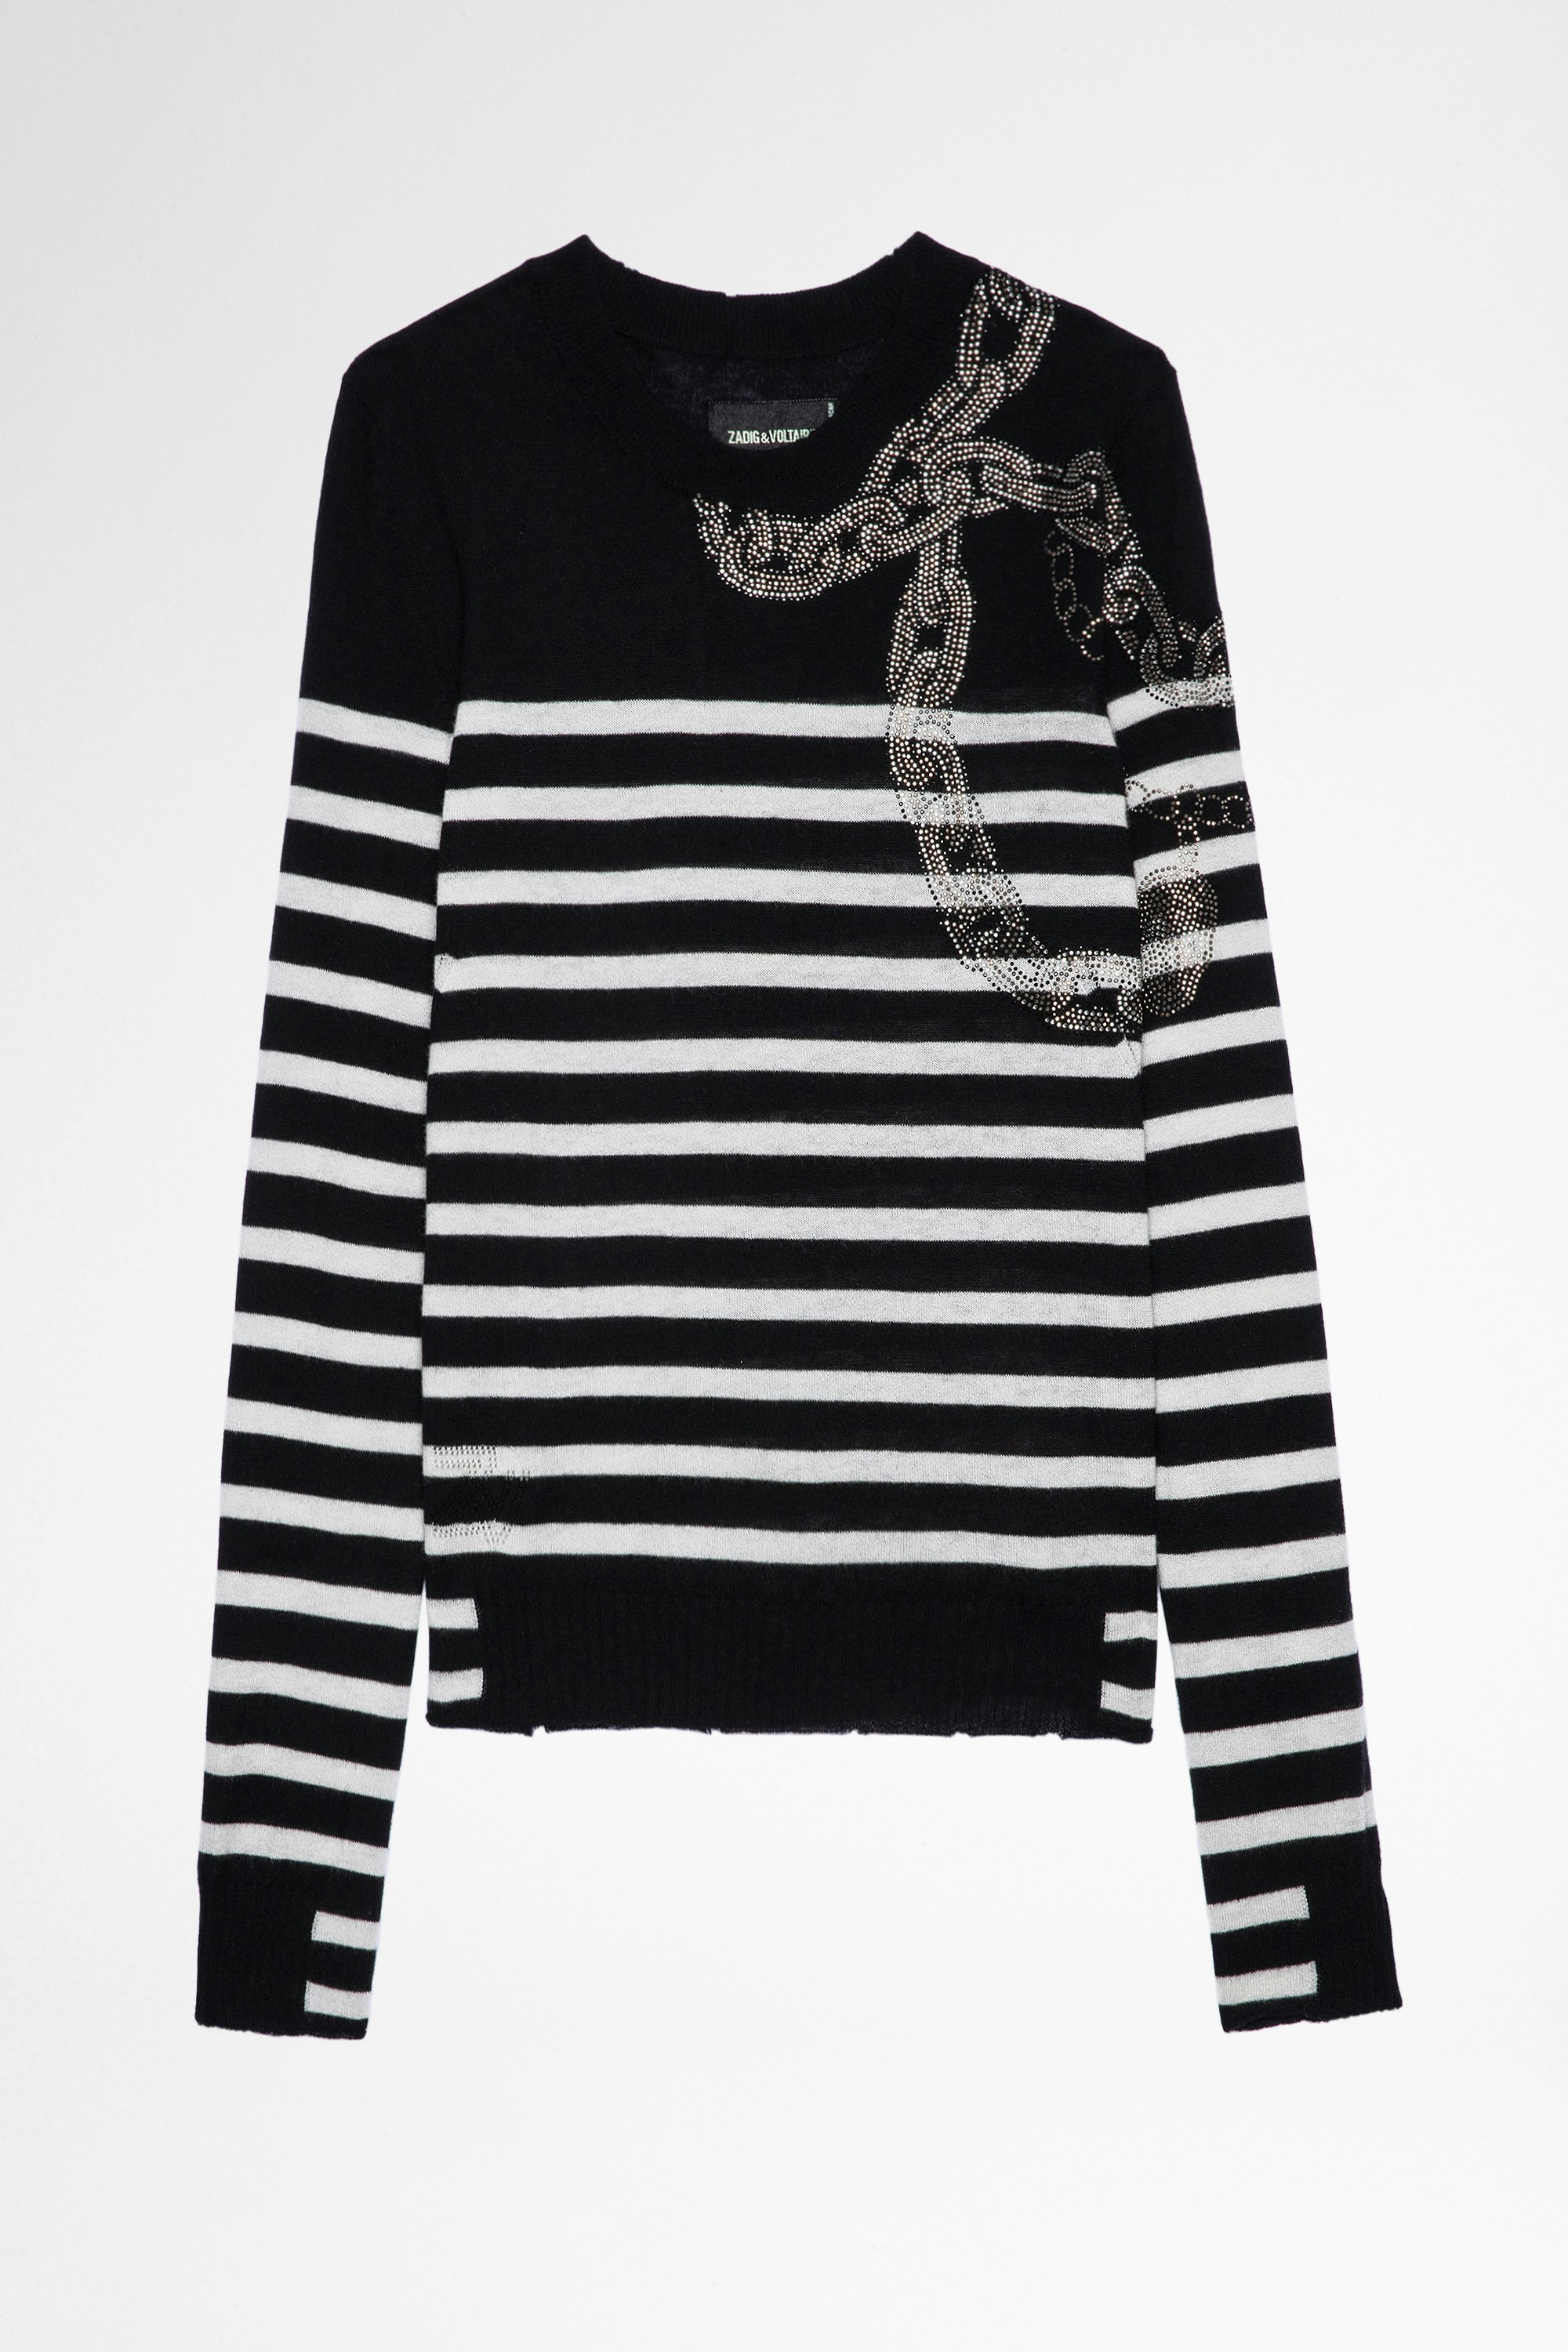 Source スウェット Women's black striped cashmere sweater with rhinestones